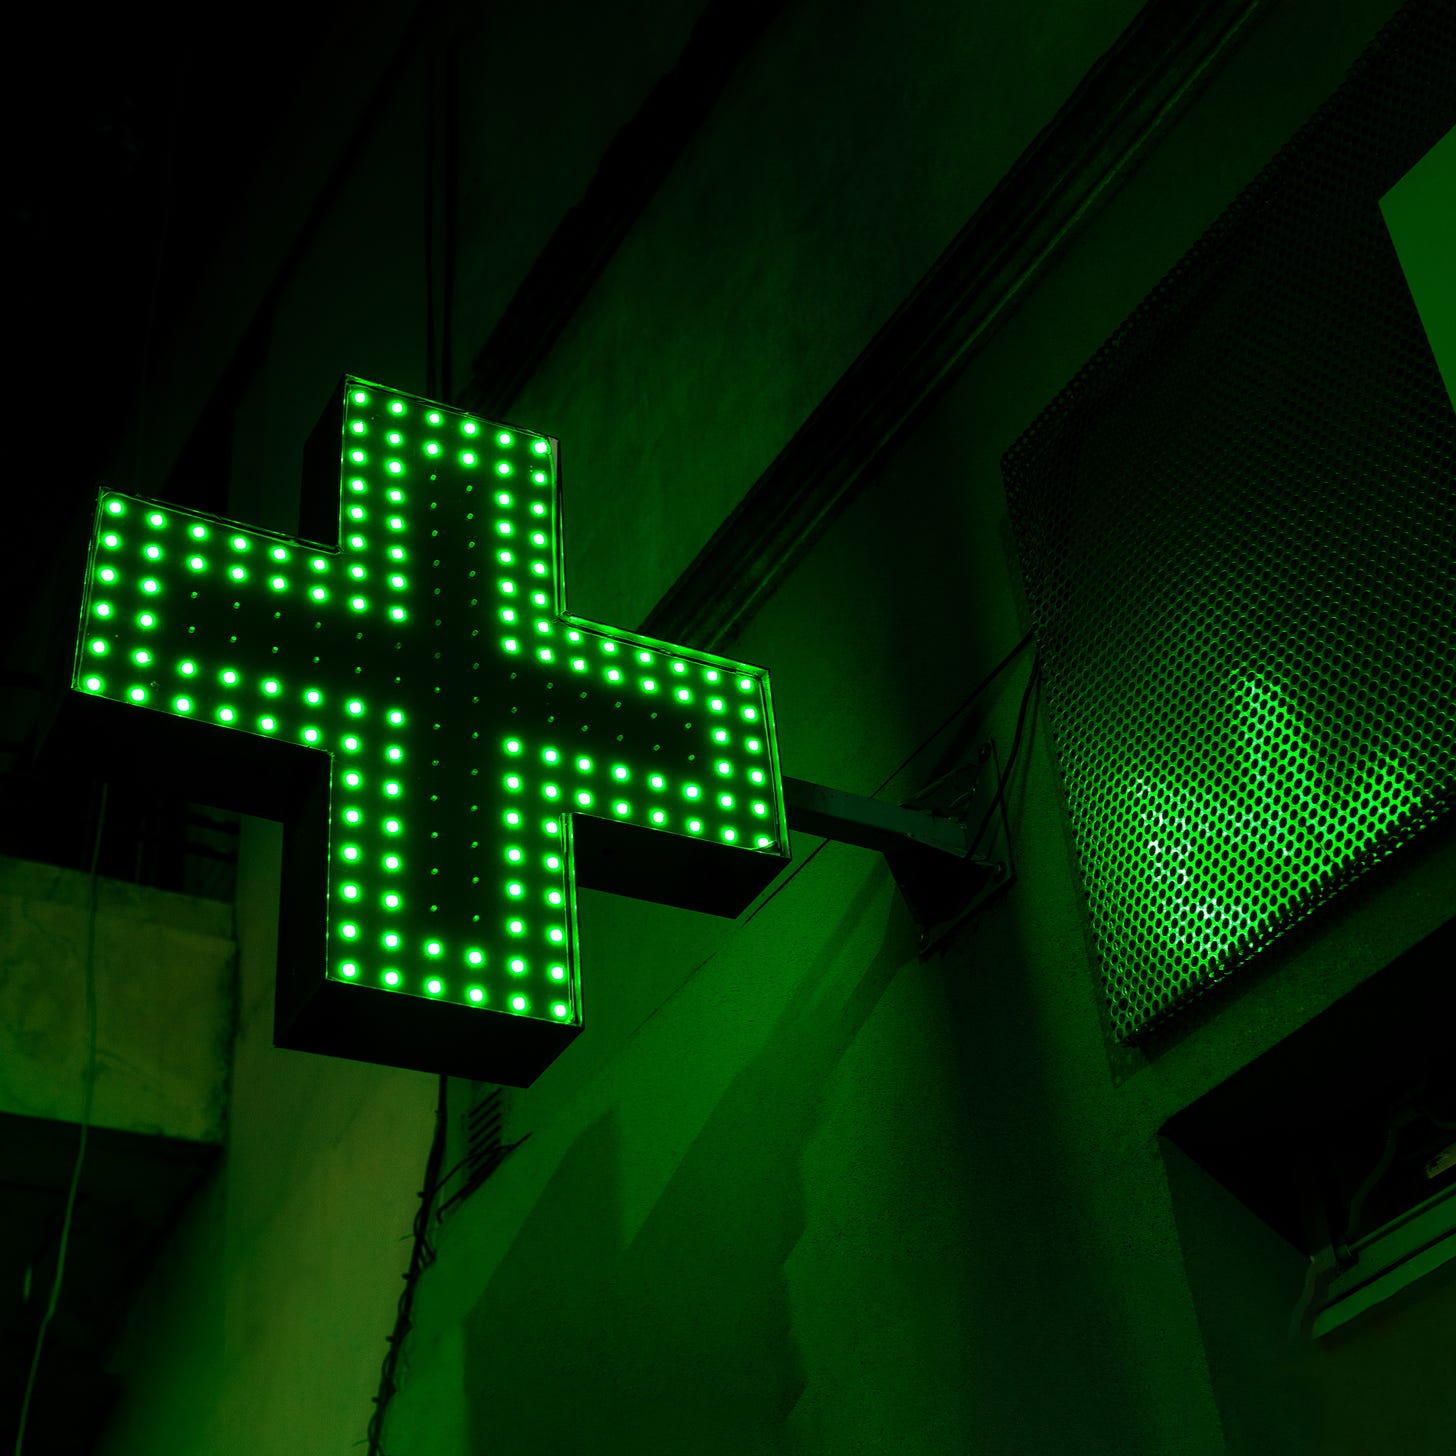 An illuminated green cross pharmacy sign.